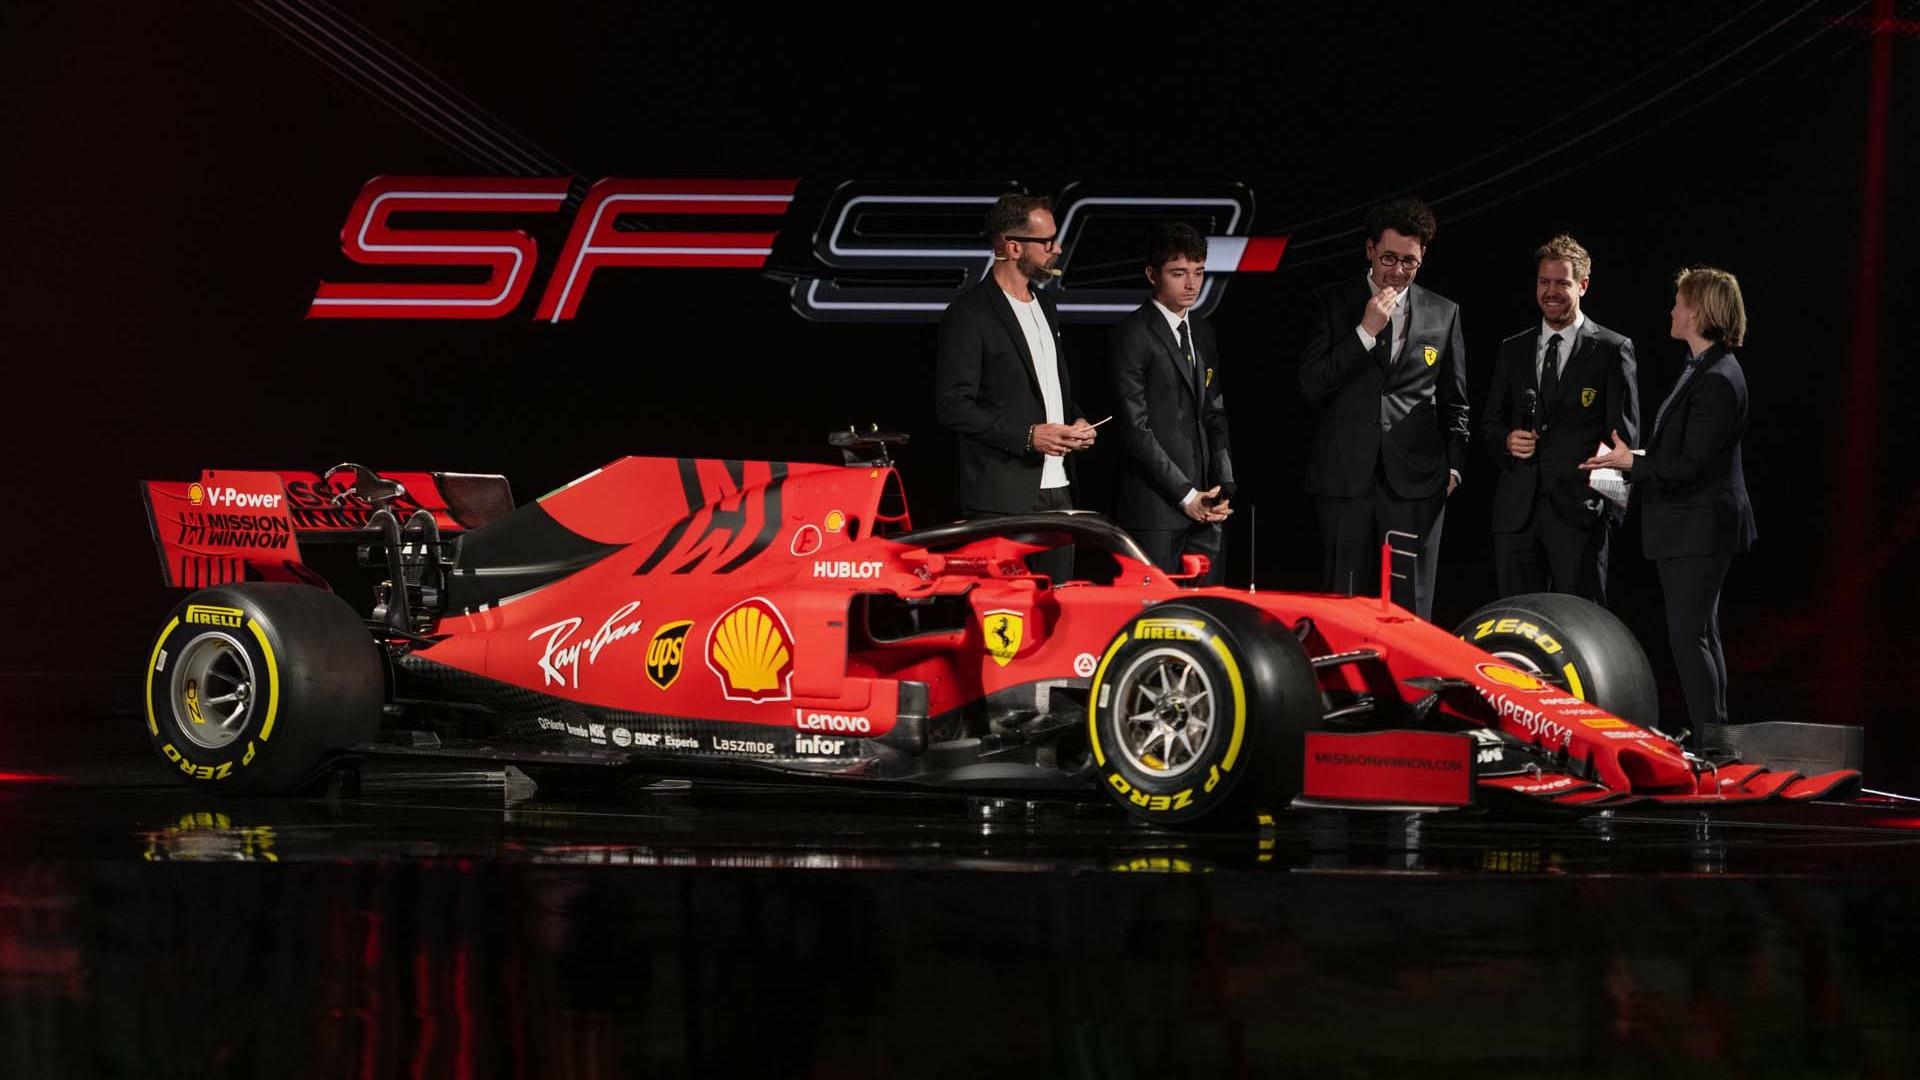 Ferrari unveils latest F racer to challenge Mercedes